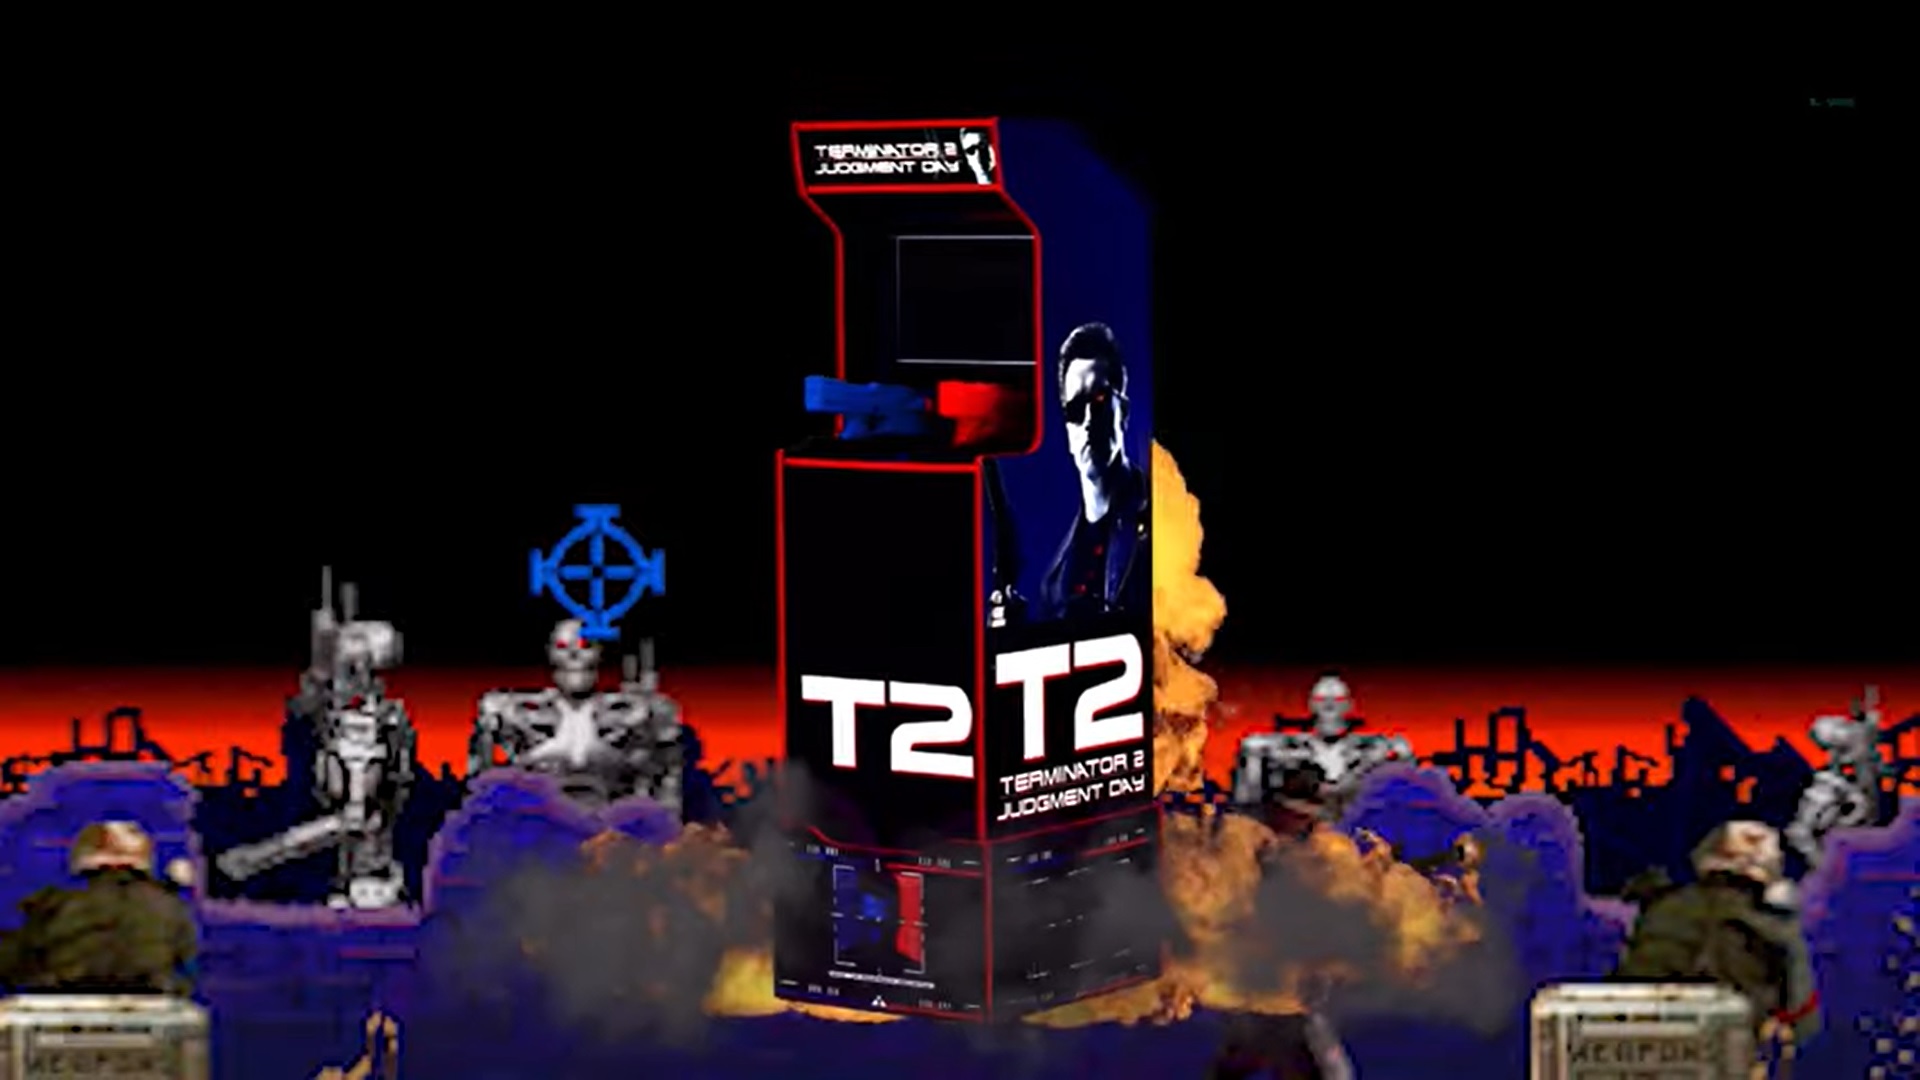 The Terminator 2 Arcade Machine is back!